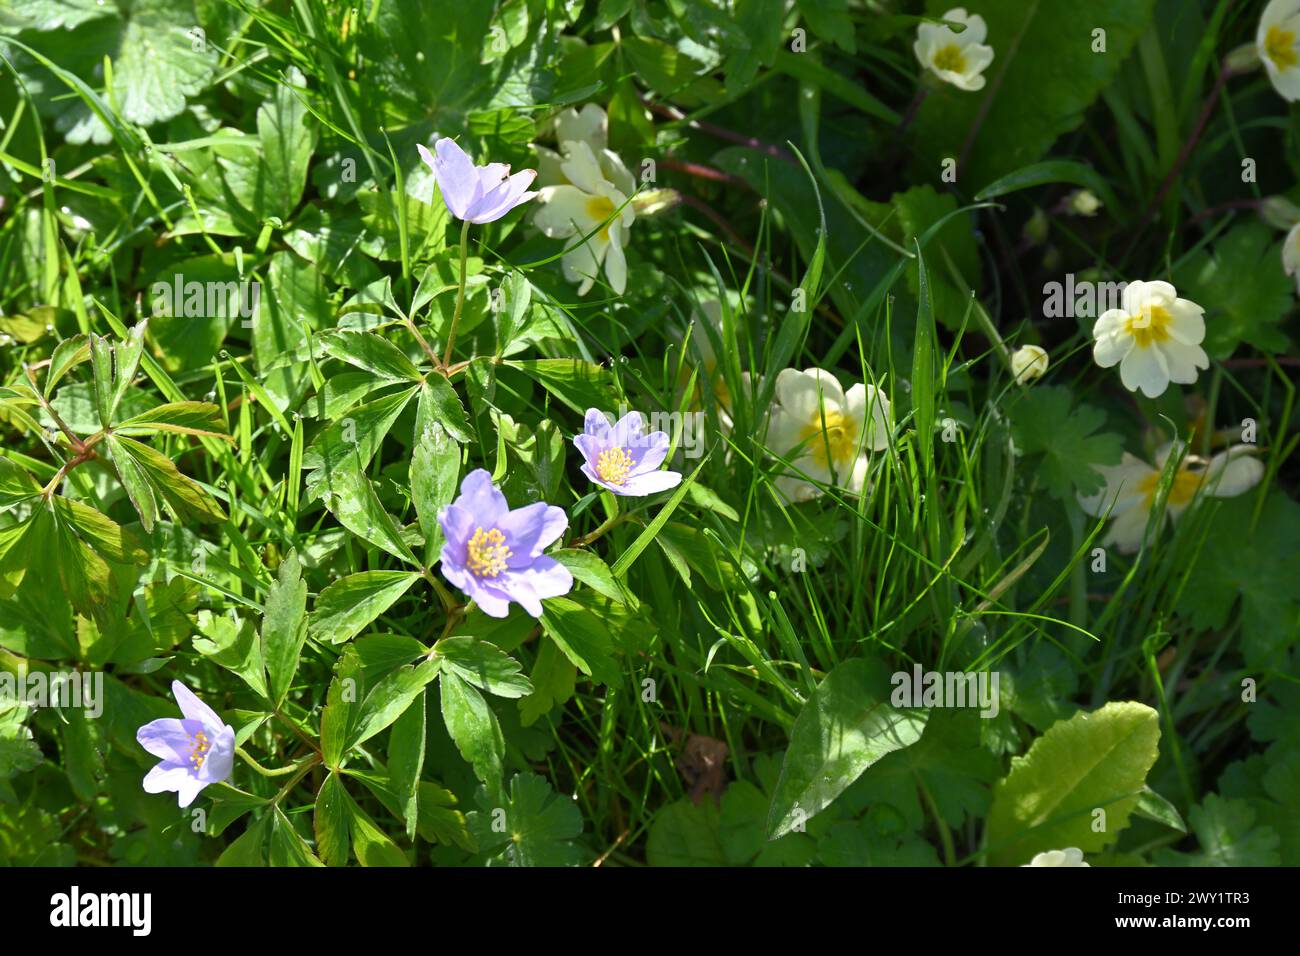 Pale blue spring flowers of wood anemone, anemone nemorosa Robinsoniana, and yellow primroses primula vulgaris  naturalised in grass, UK garden March Stock Photo